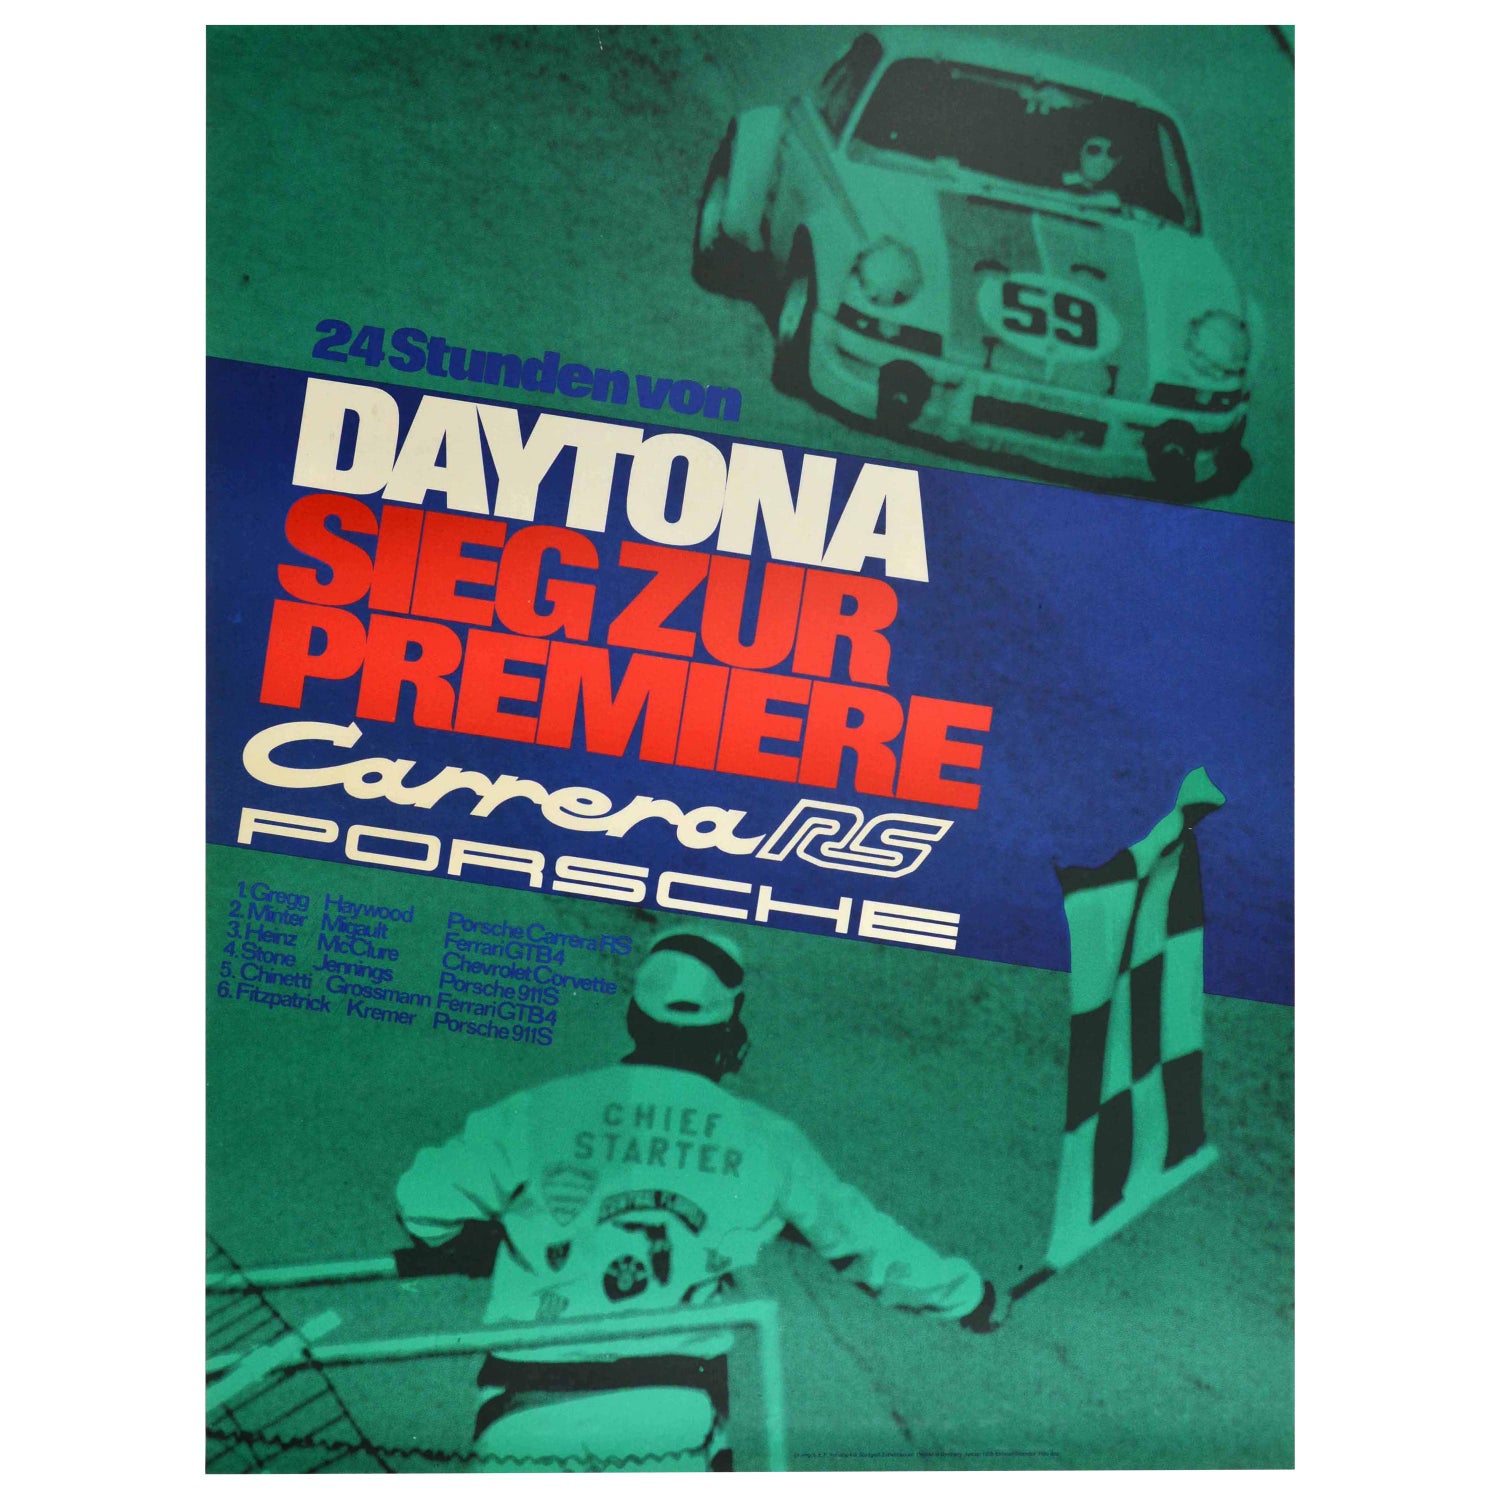 Original Vintage Racing Poster for Carrera Panamericana Mexico at 1stDibs | carrera  panamericana poster, mexico vintage poster